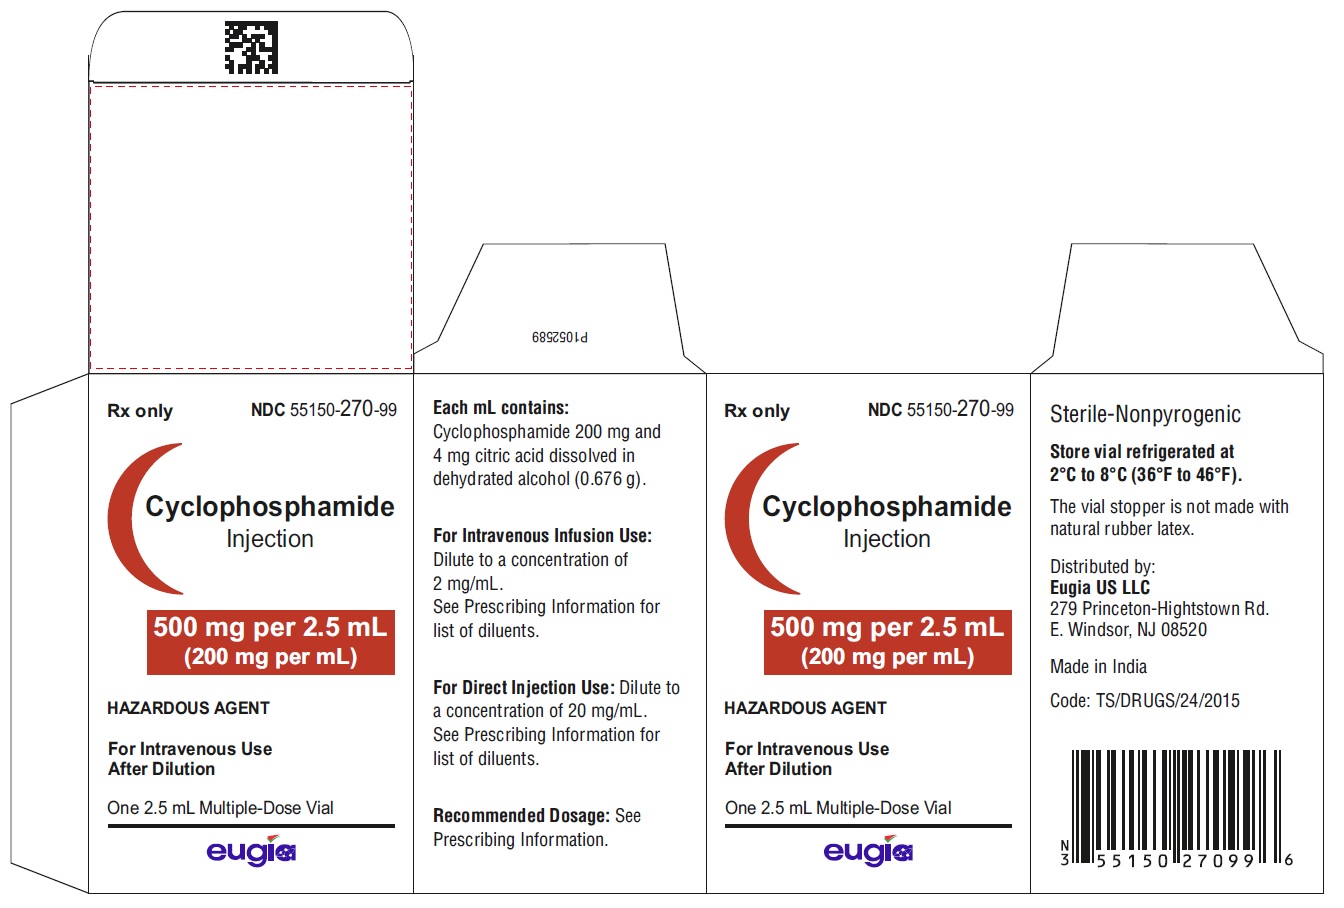 PACKAGE LABEL-PRINCIPAL DISPLAY PANEL-500 mg per 2.5 mL (200 mg per mL) - Container-Carton (1 Vial)